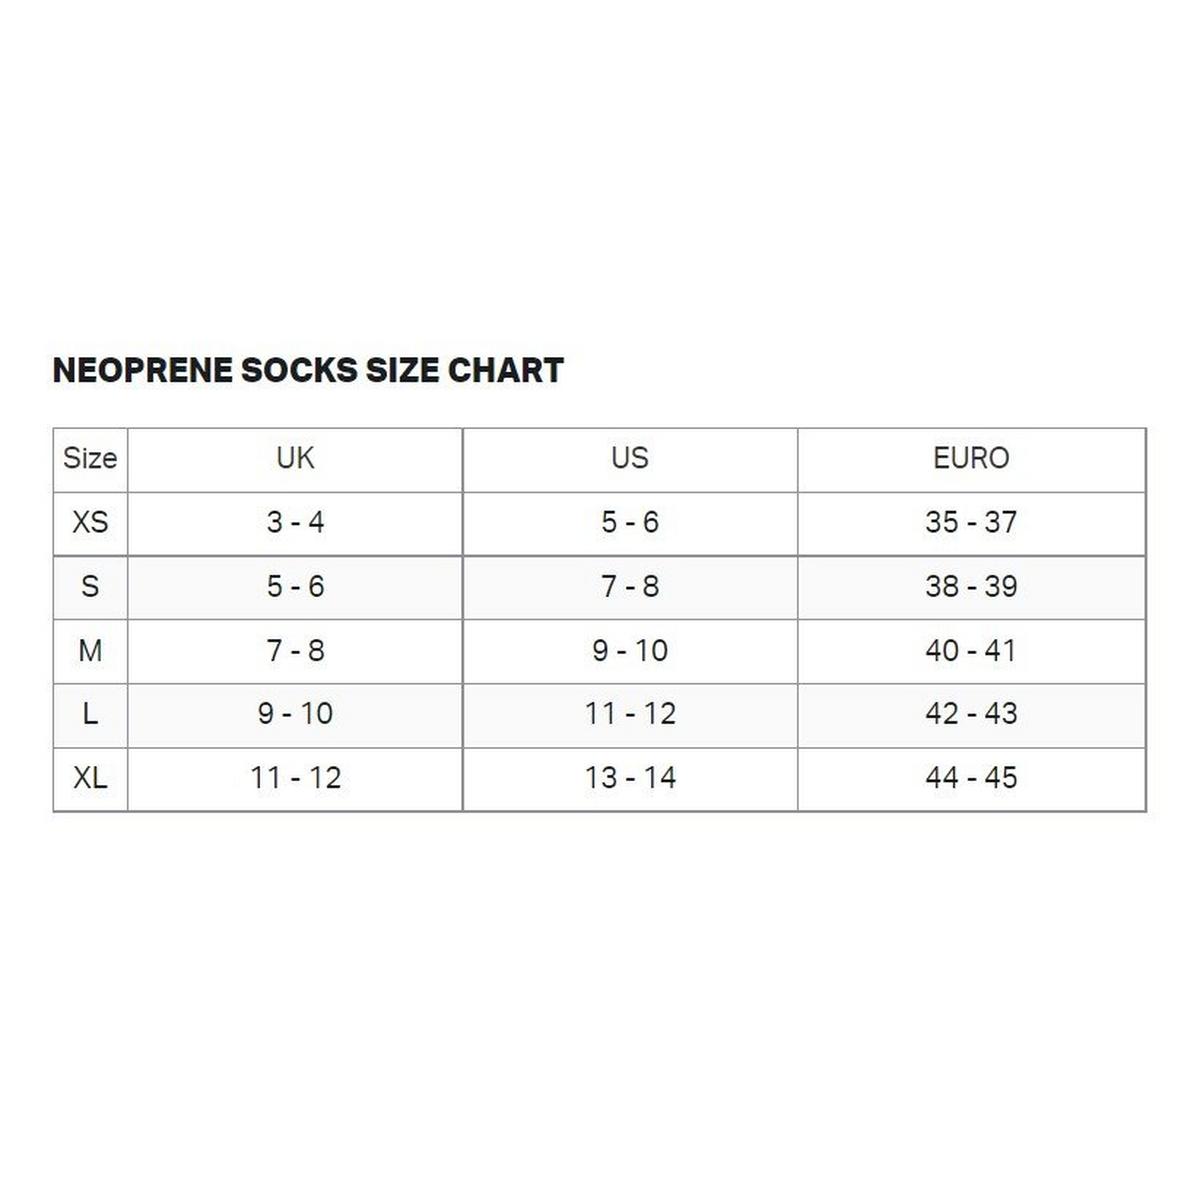 Zone3 Neoprene Heat Tech Swim Socks - Black